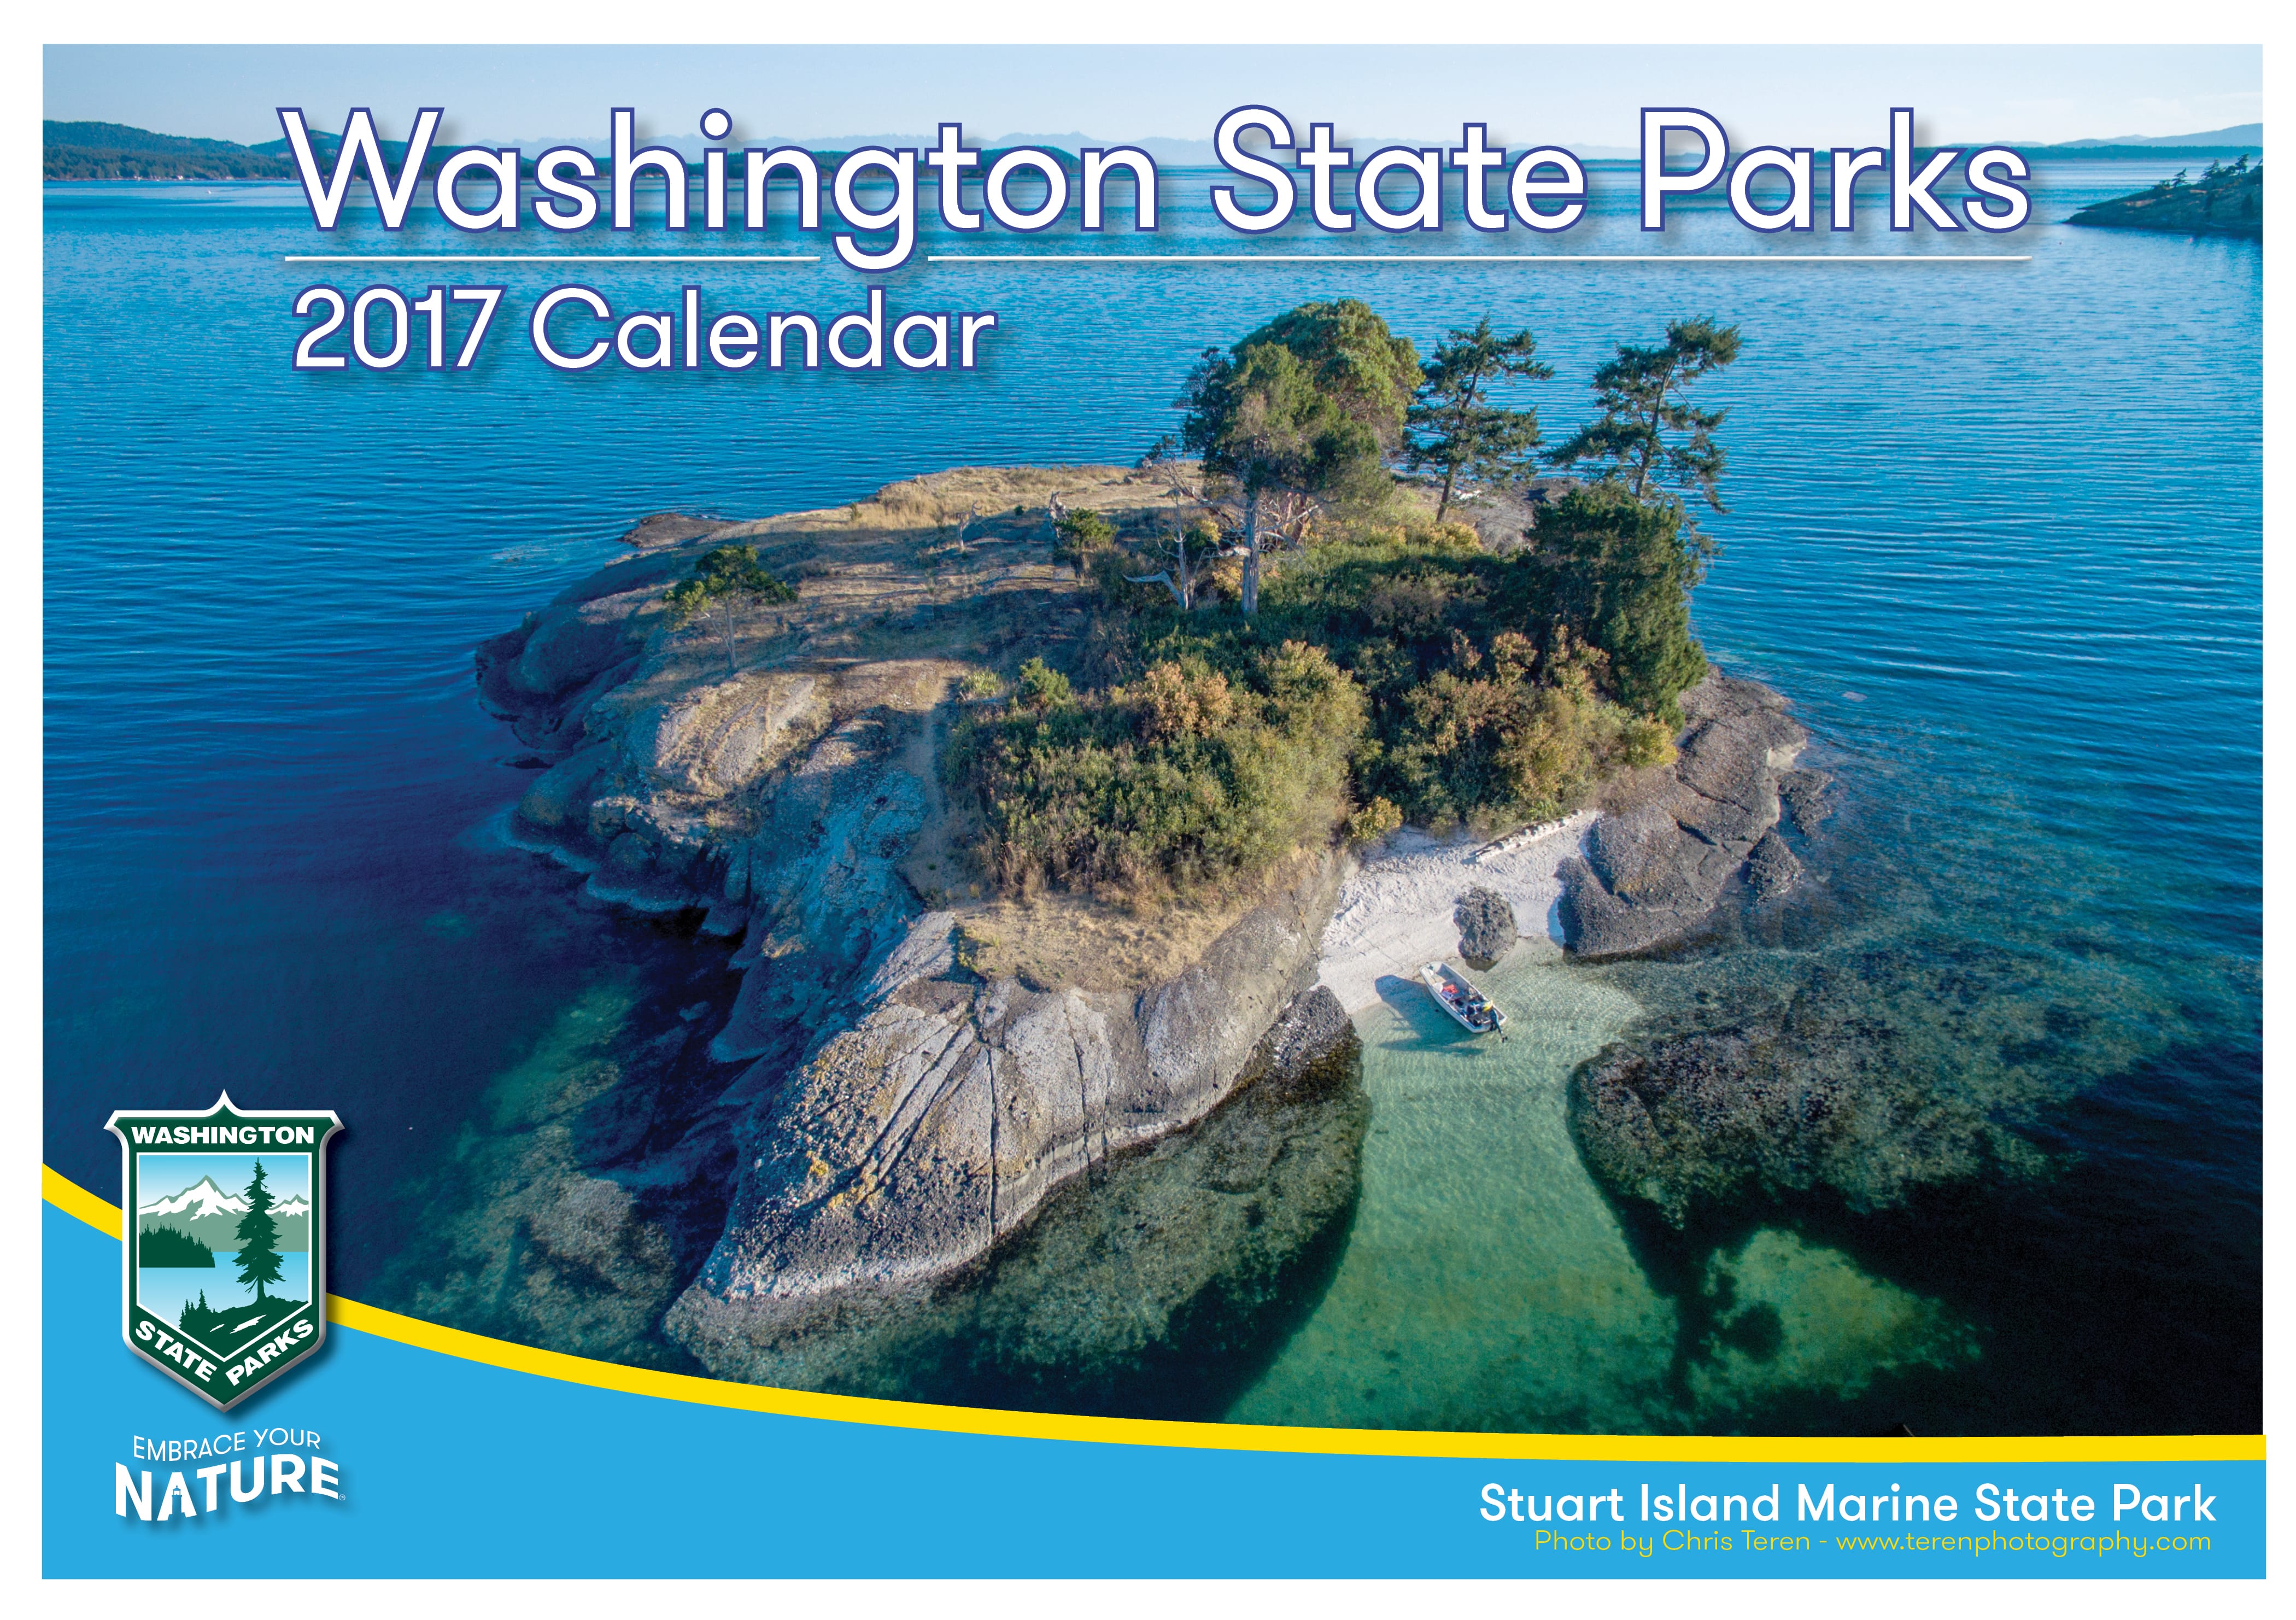 washington-state-parks-2017-calendar-available-the-columbian